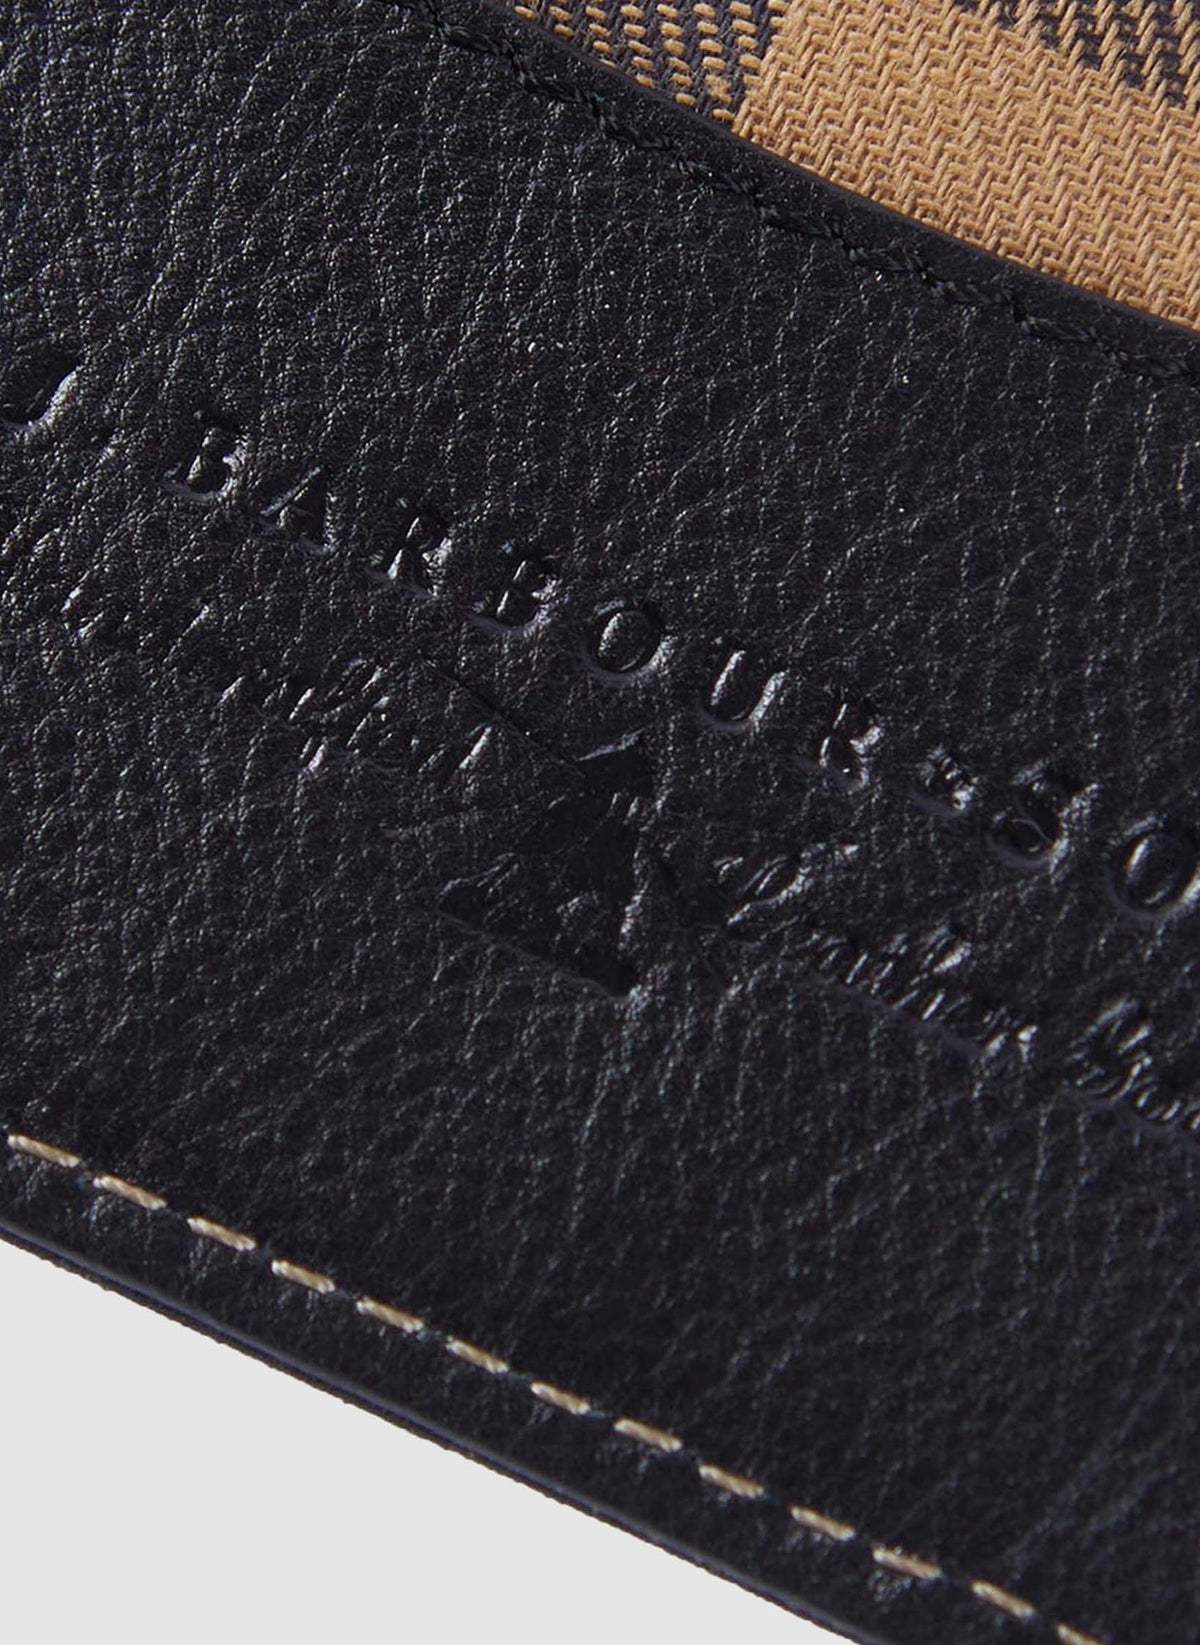 Elvington Leather Card Holder - Black